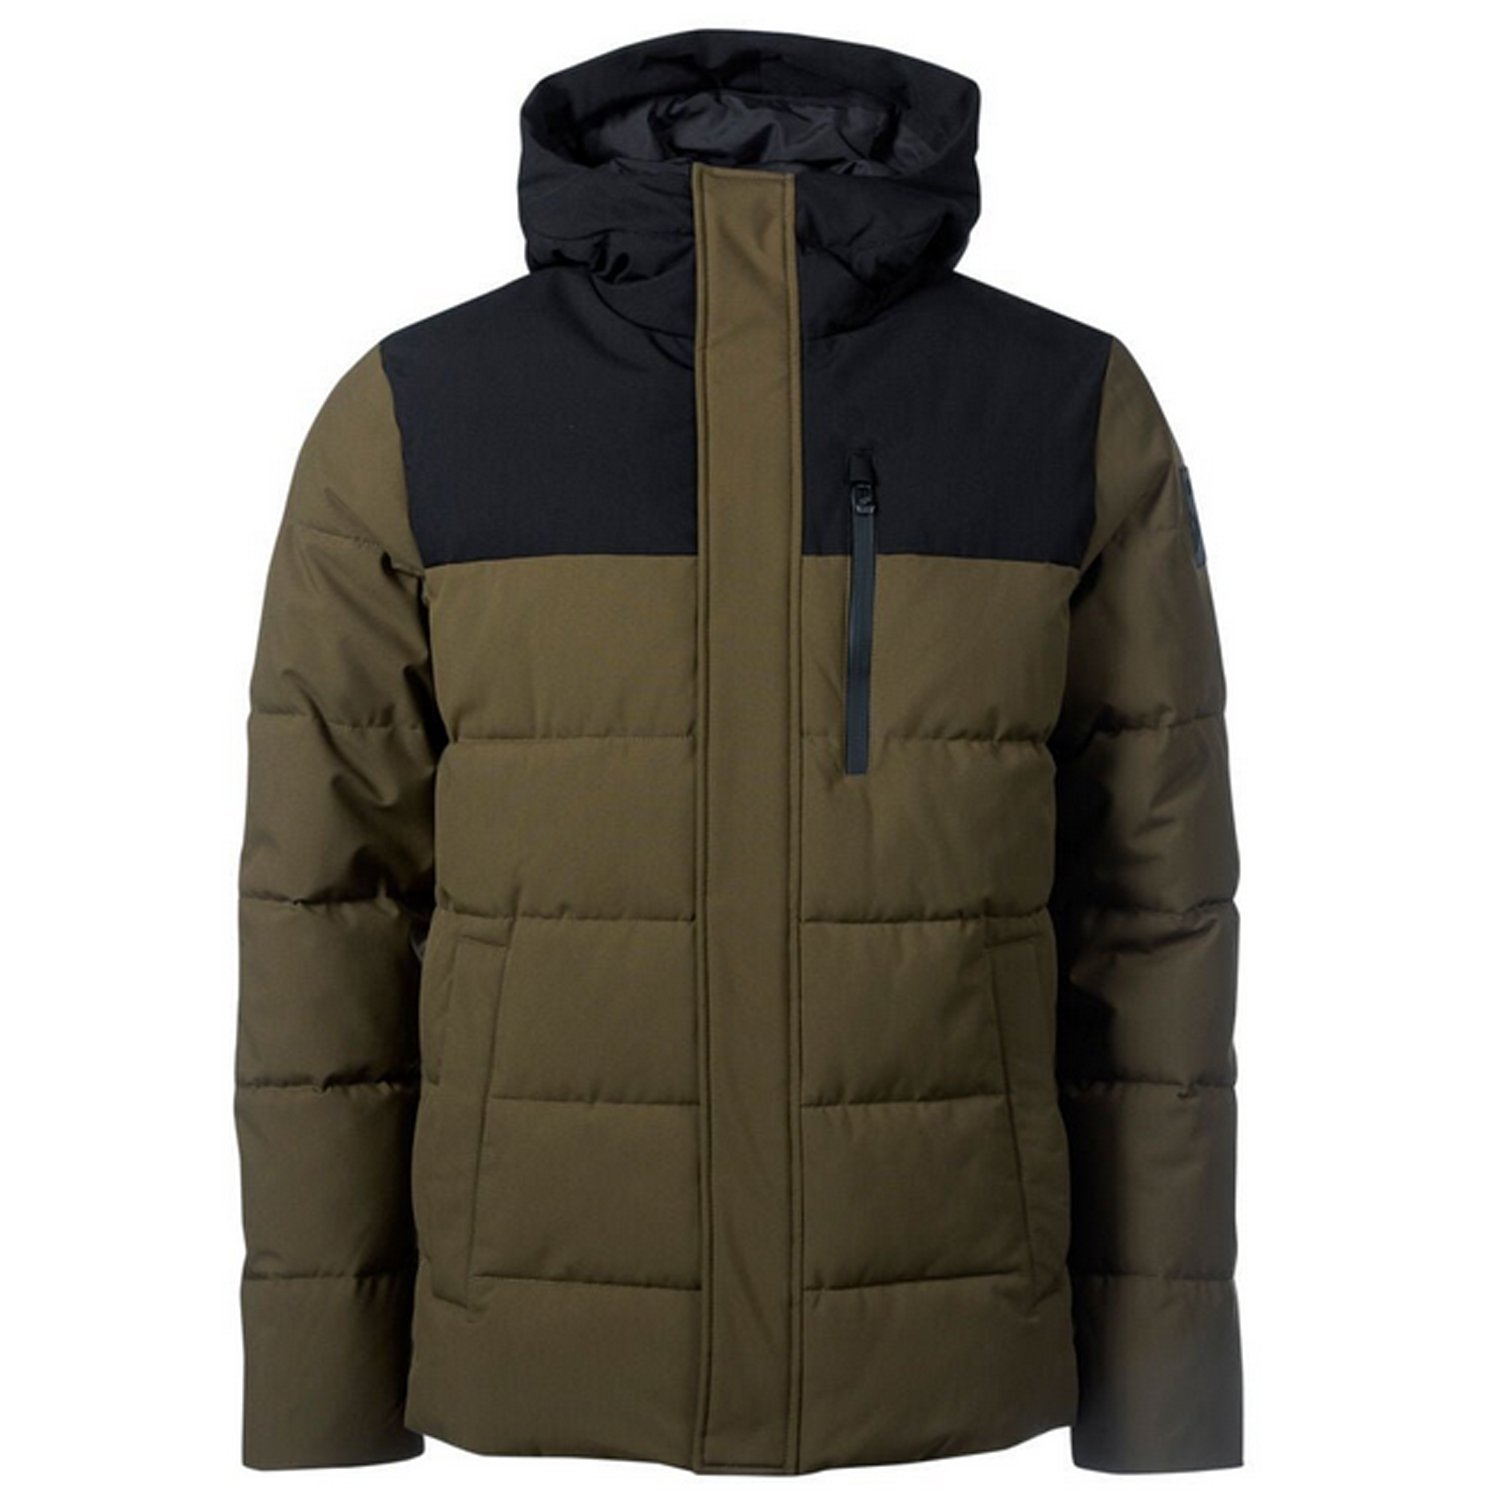 Куртка мужская Halti Haaga, dark olive, EH065-0390-U57 куртка утепленная мужская columbia powder lite jacket